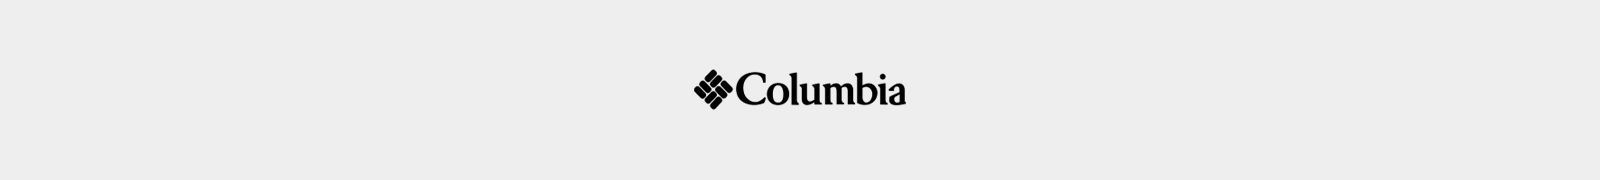 Columbia header image